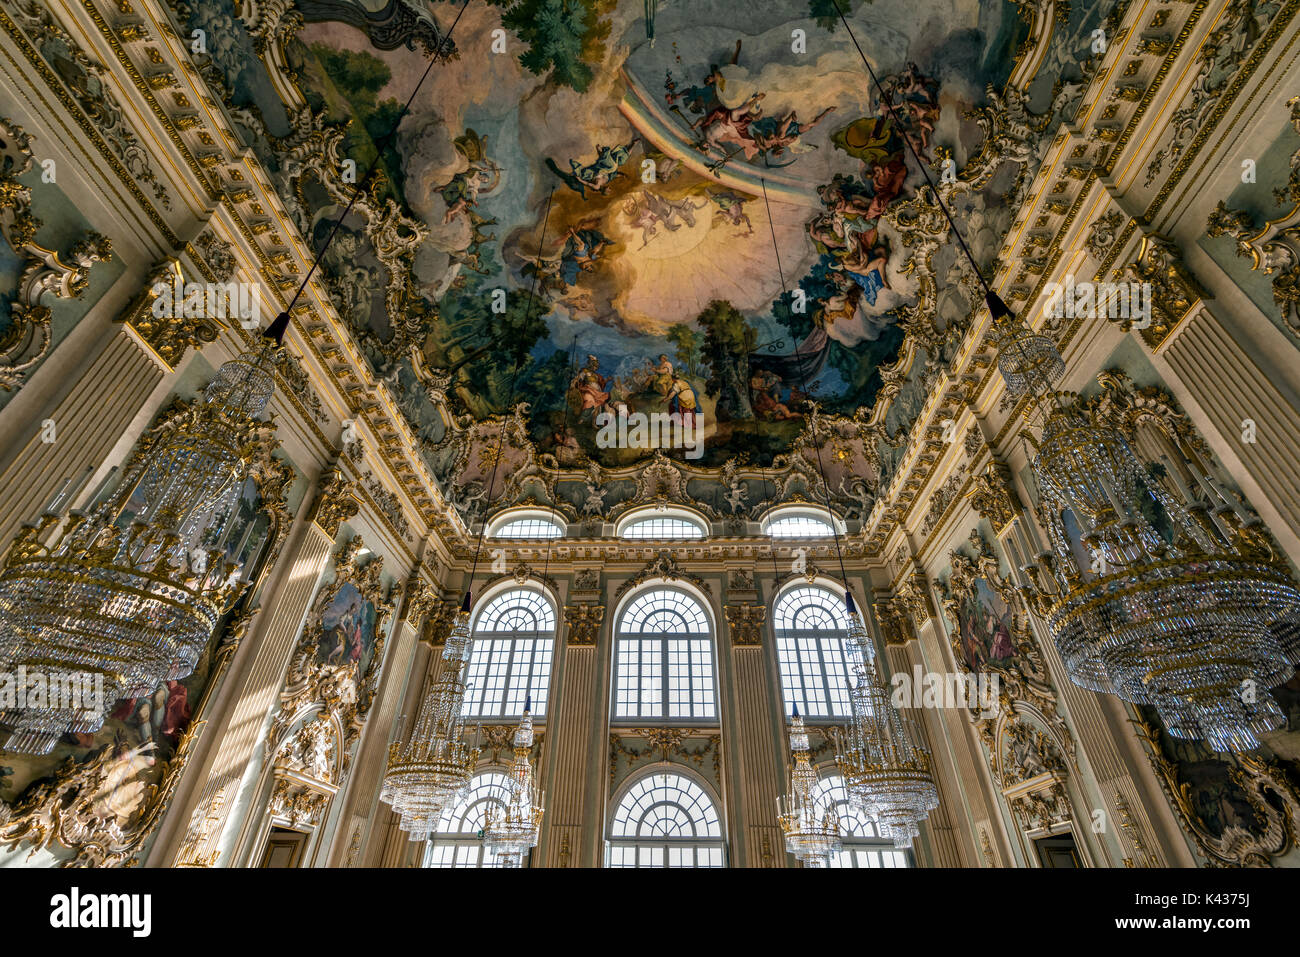 Steinerner Saal or Stone Hall, Nymphenburg Palace, Munich, Bavaria, Germany Stock Photo